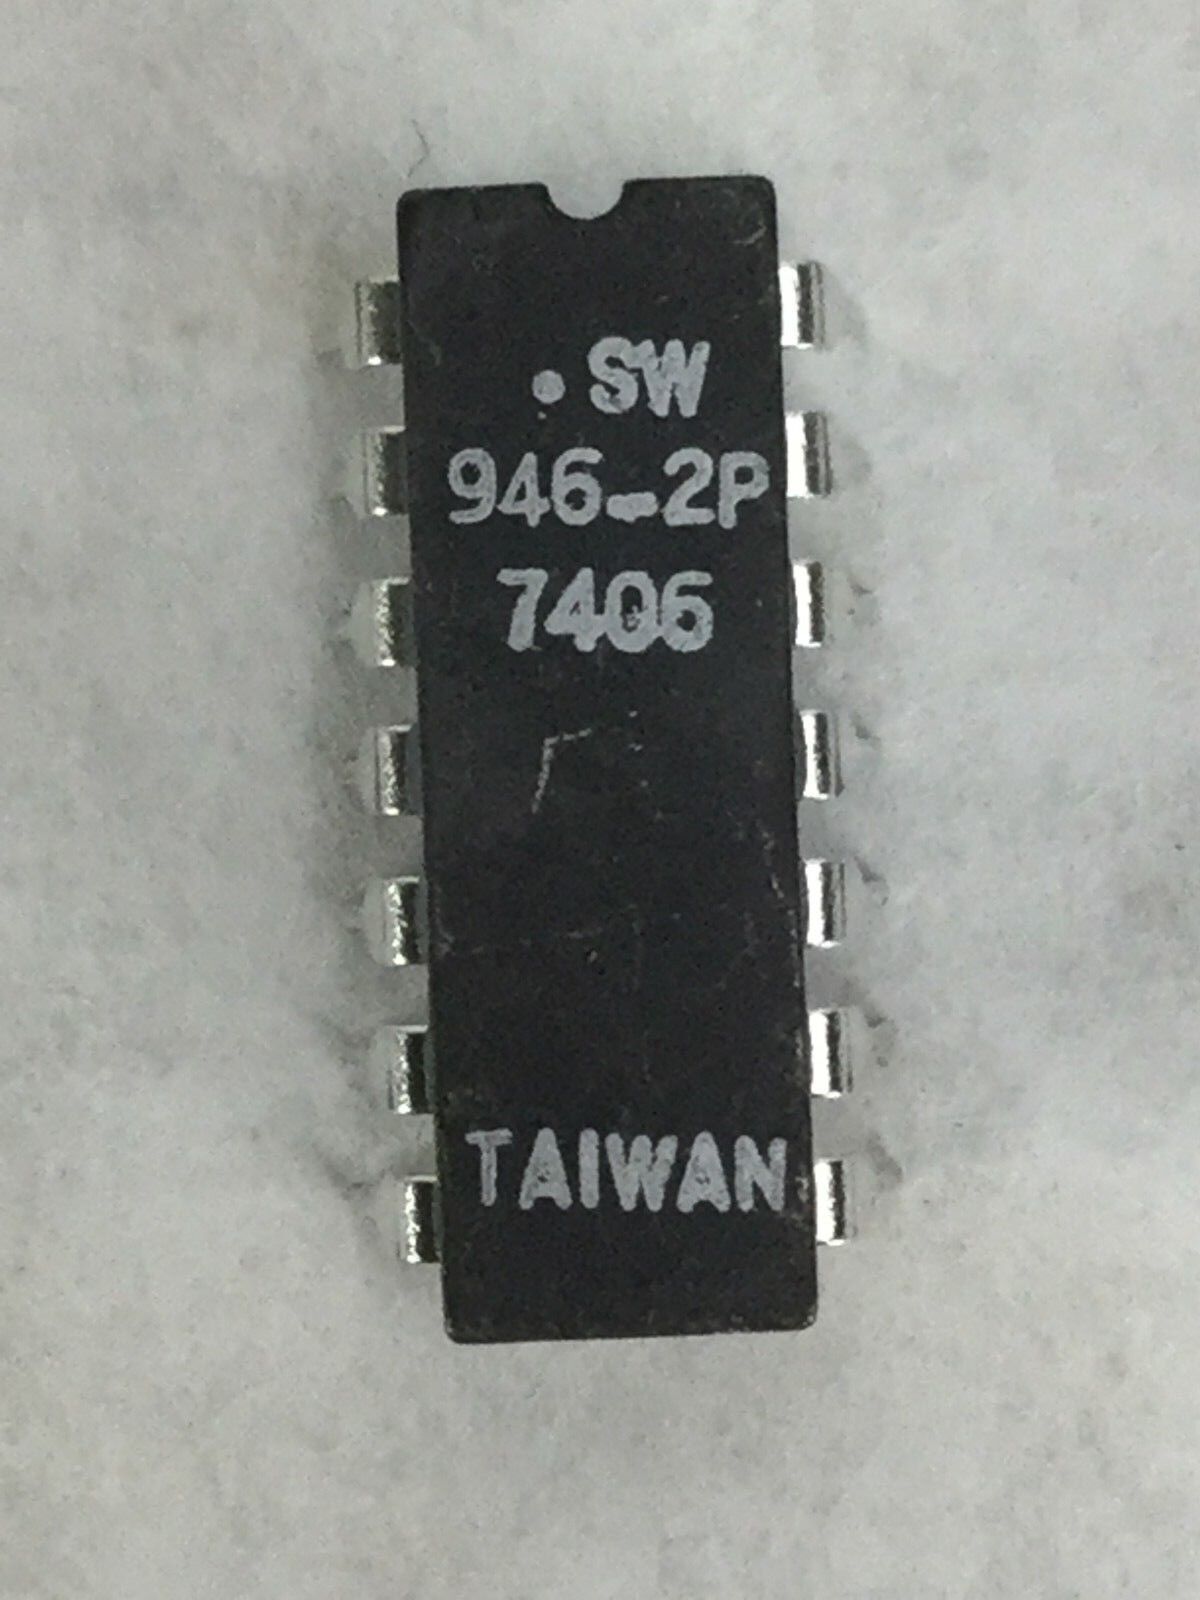 SW 946-2P STEWART WARNER   Lot of 5  14-PIN